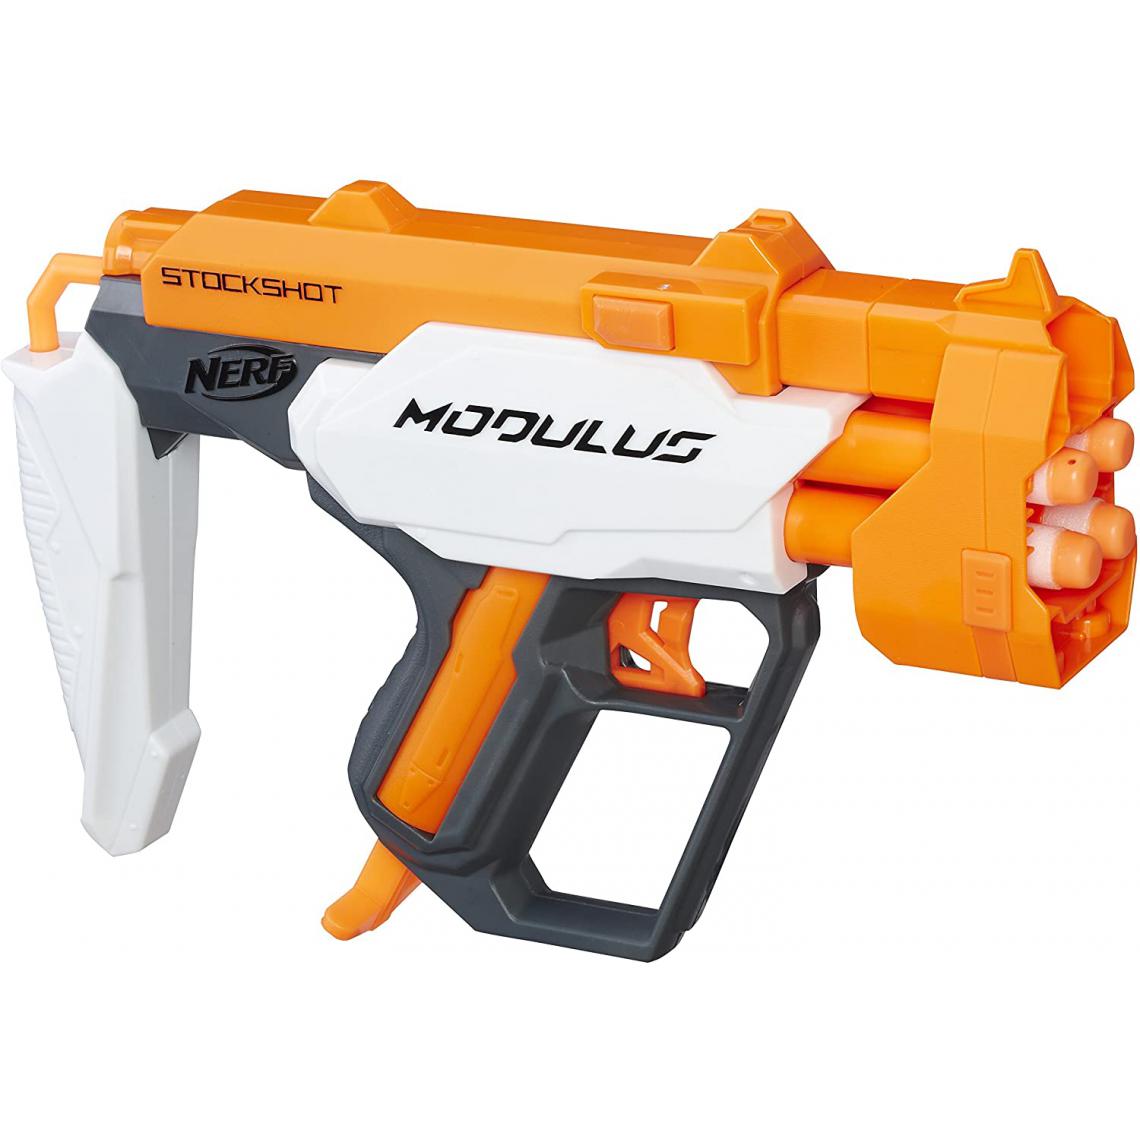 Nerf - pistolet modulus Stockshot blanc orange noir - Jeux d'adresse